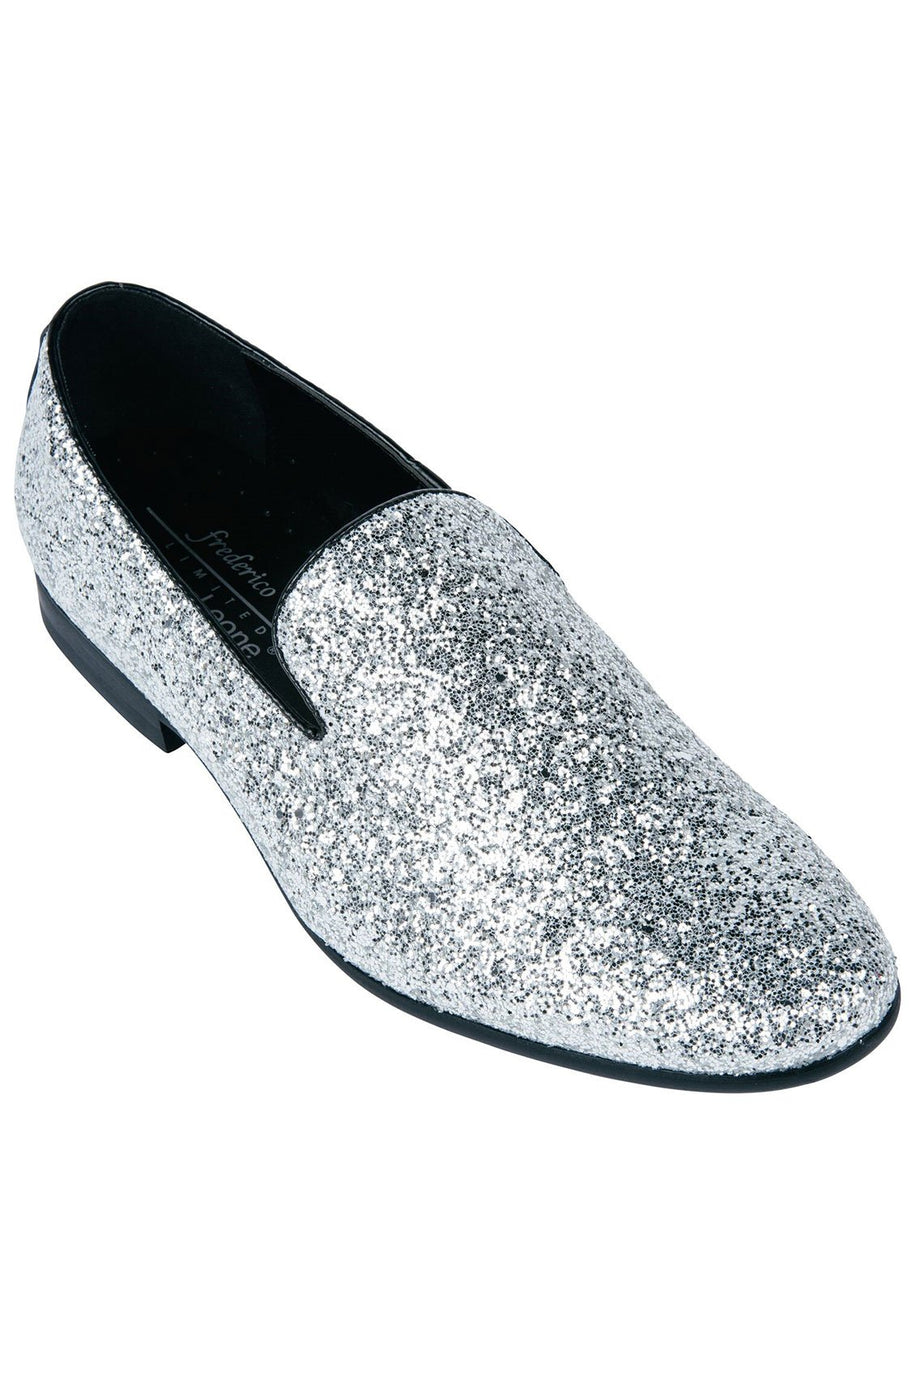 Frederico Leone "Sparkle" Silver Shoes